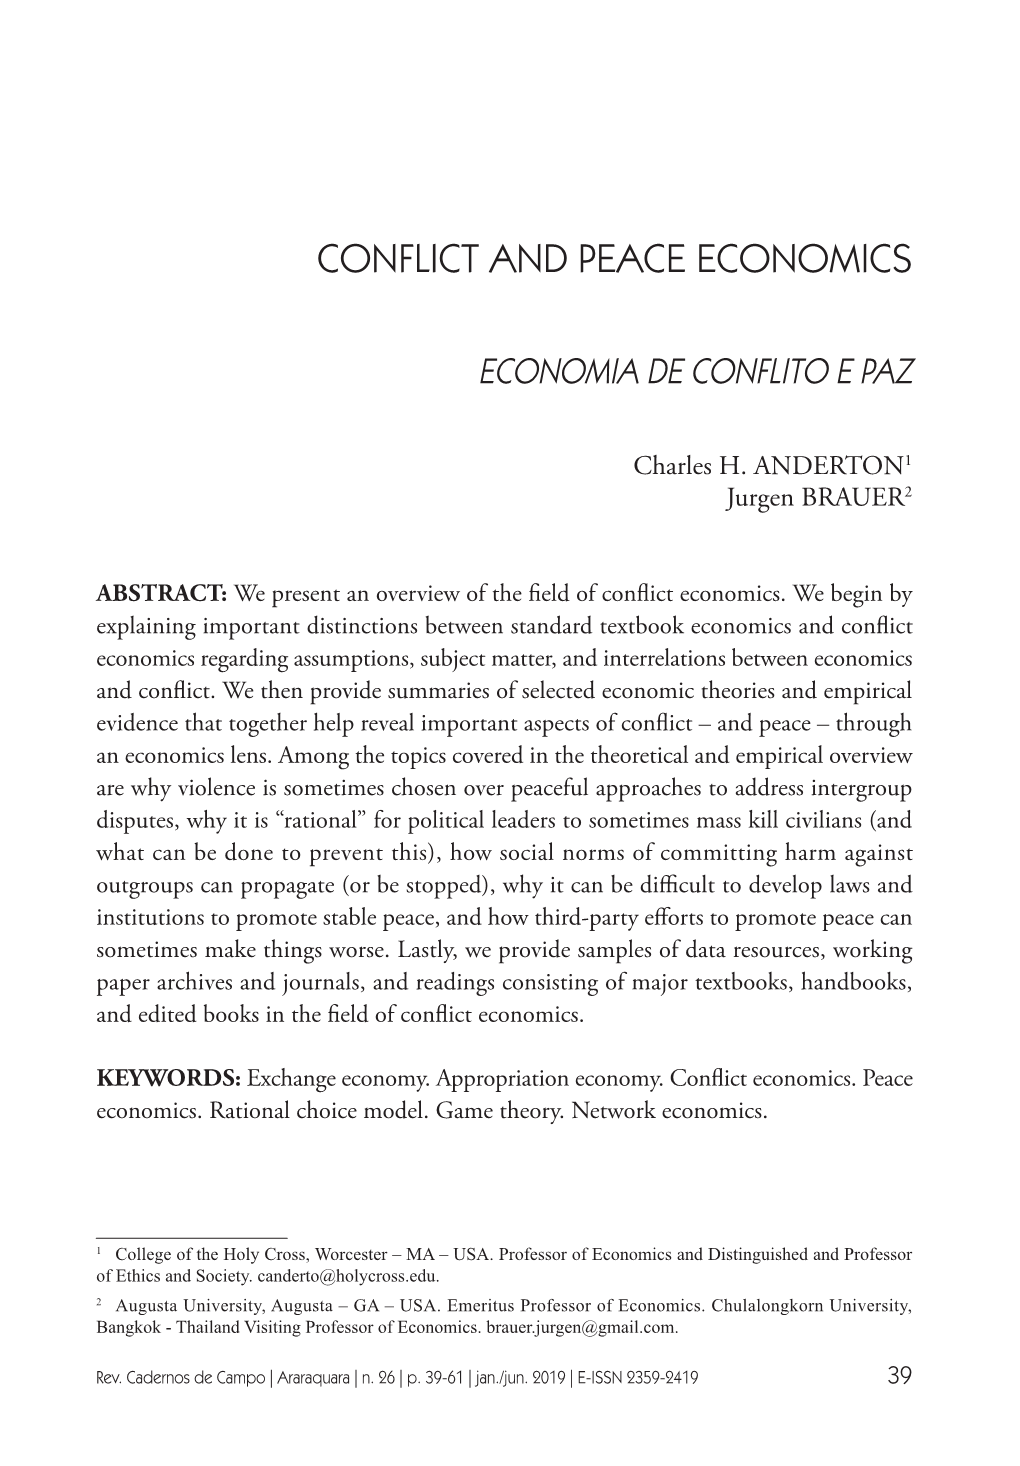 Conflict and Peace Economics